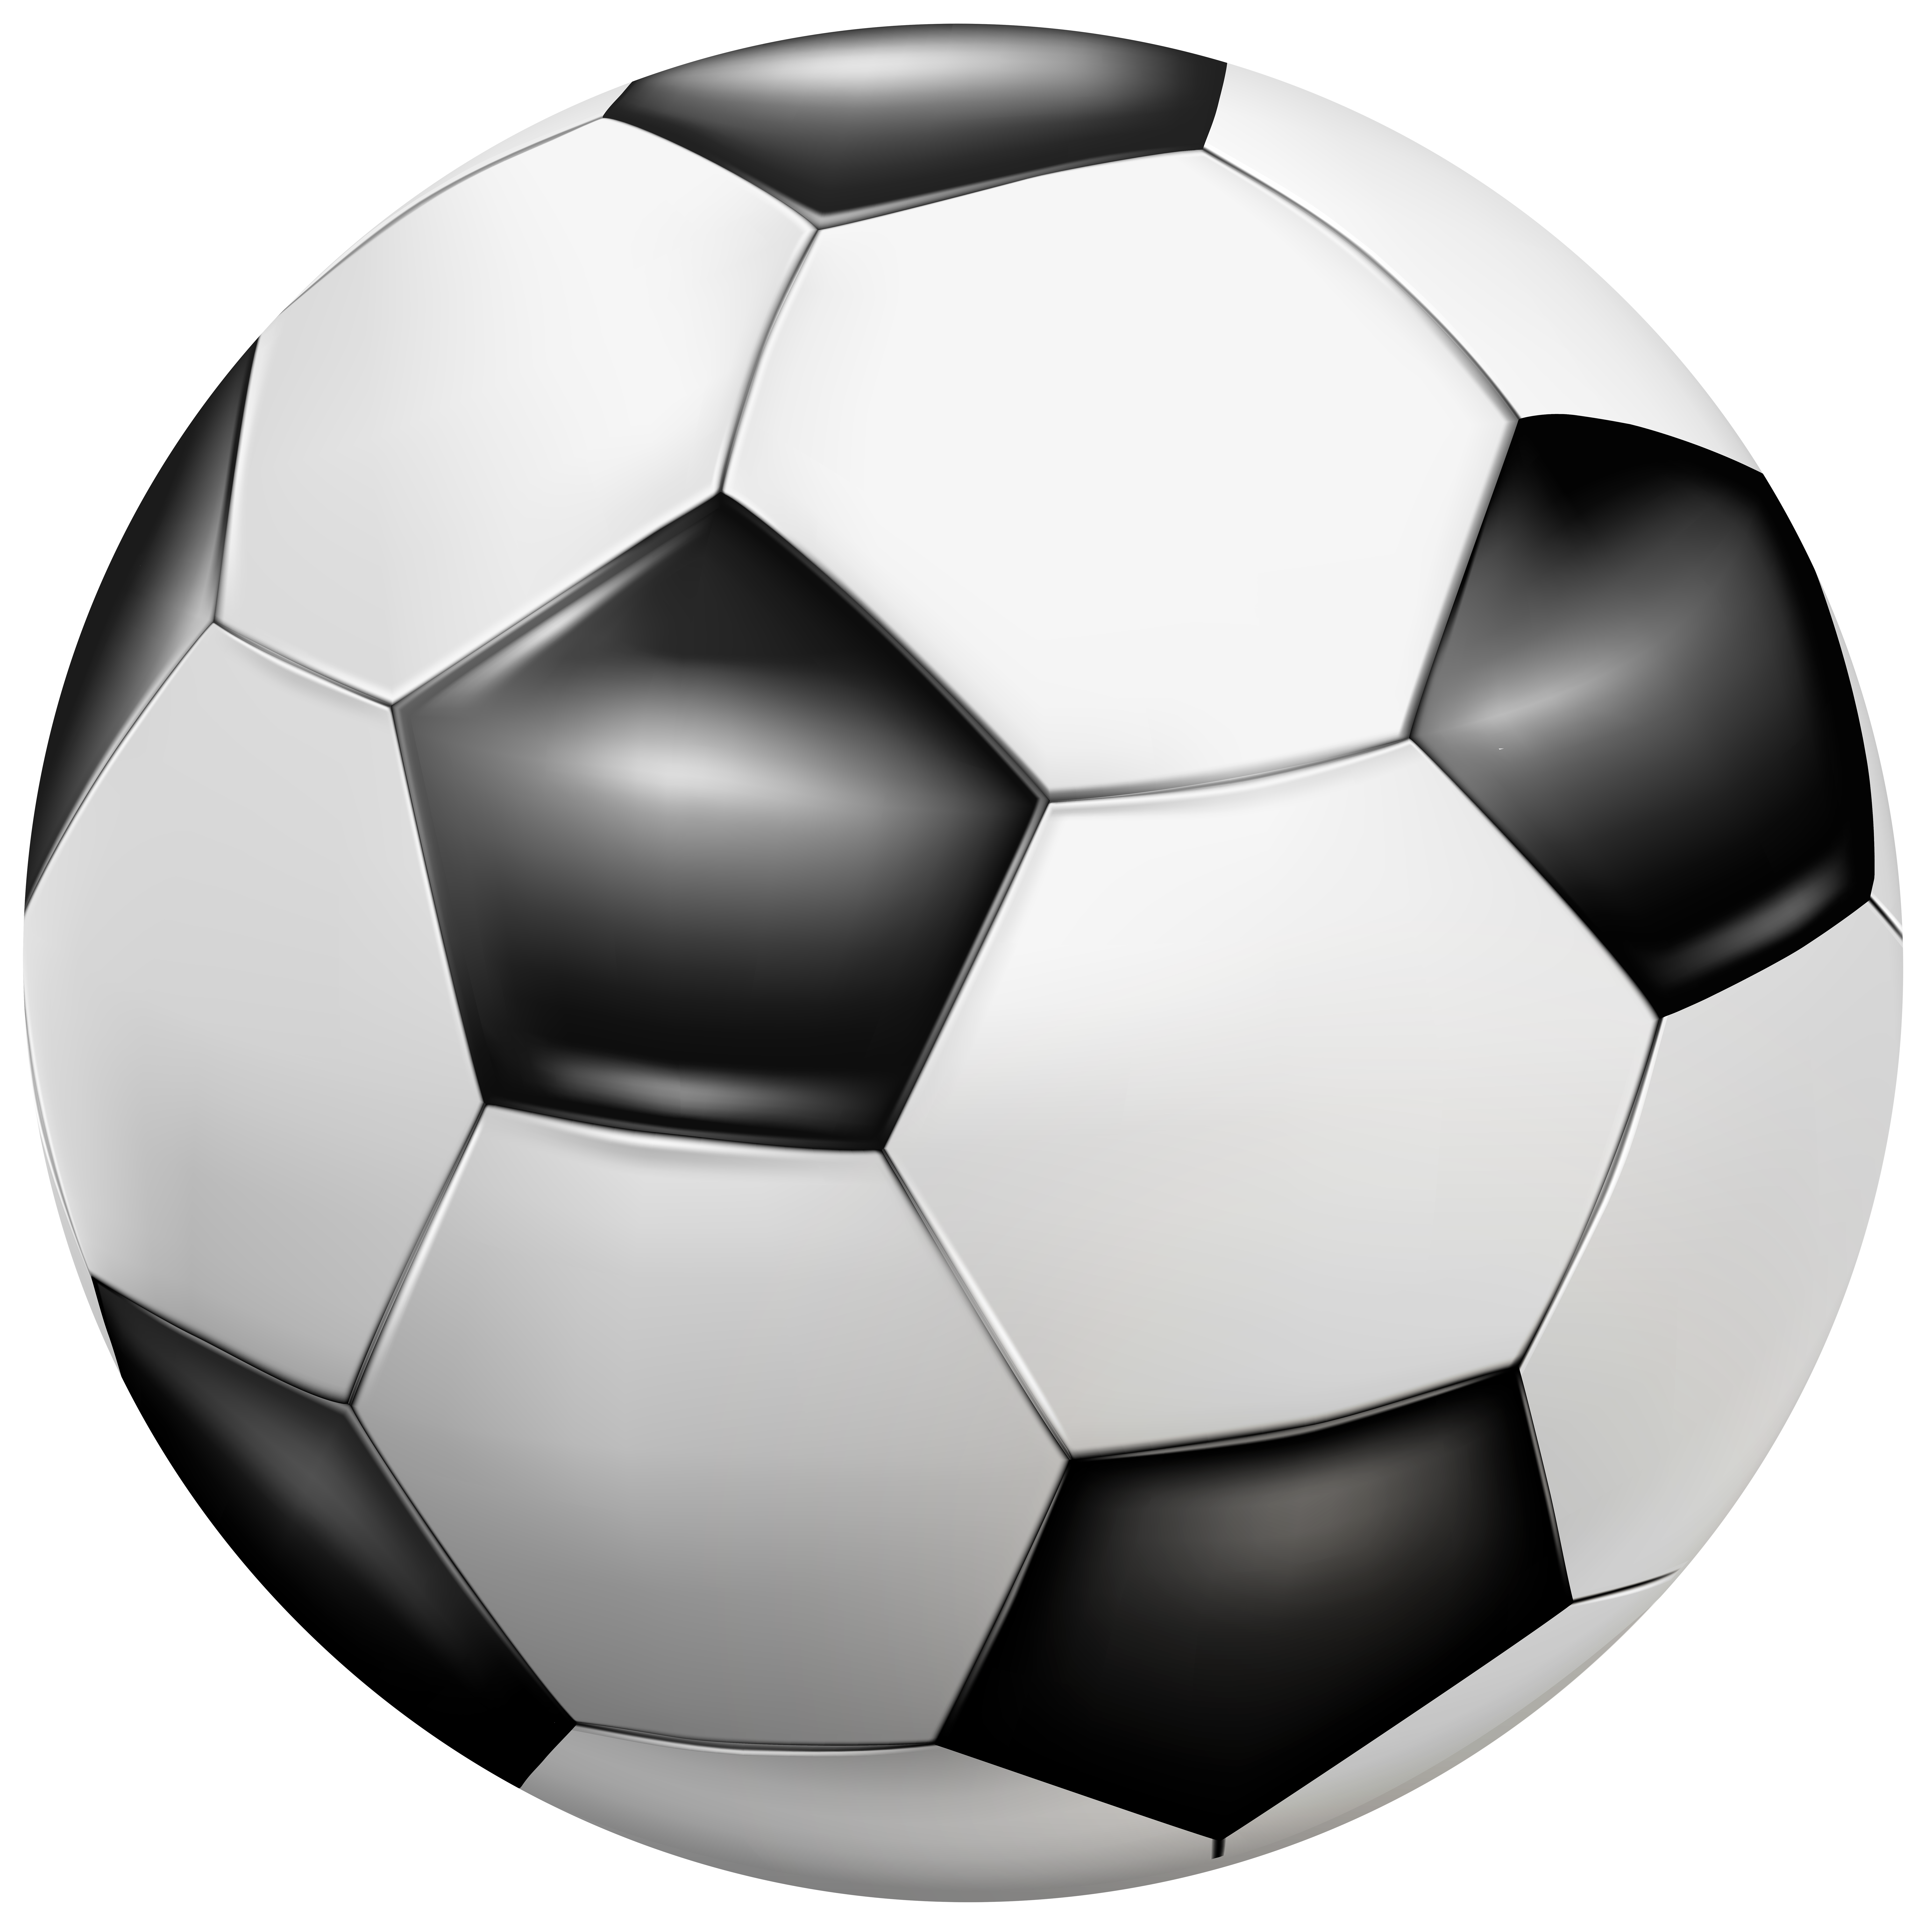 2018 FIFA World Cup Football Ball game.